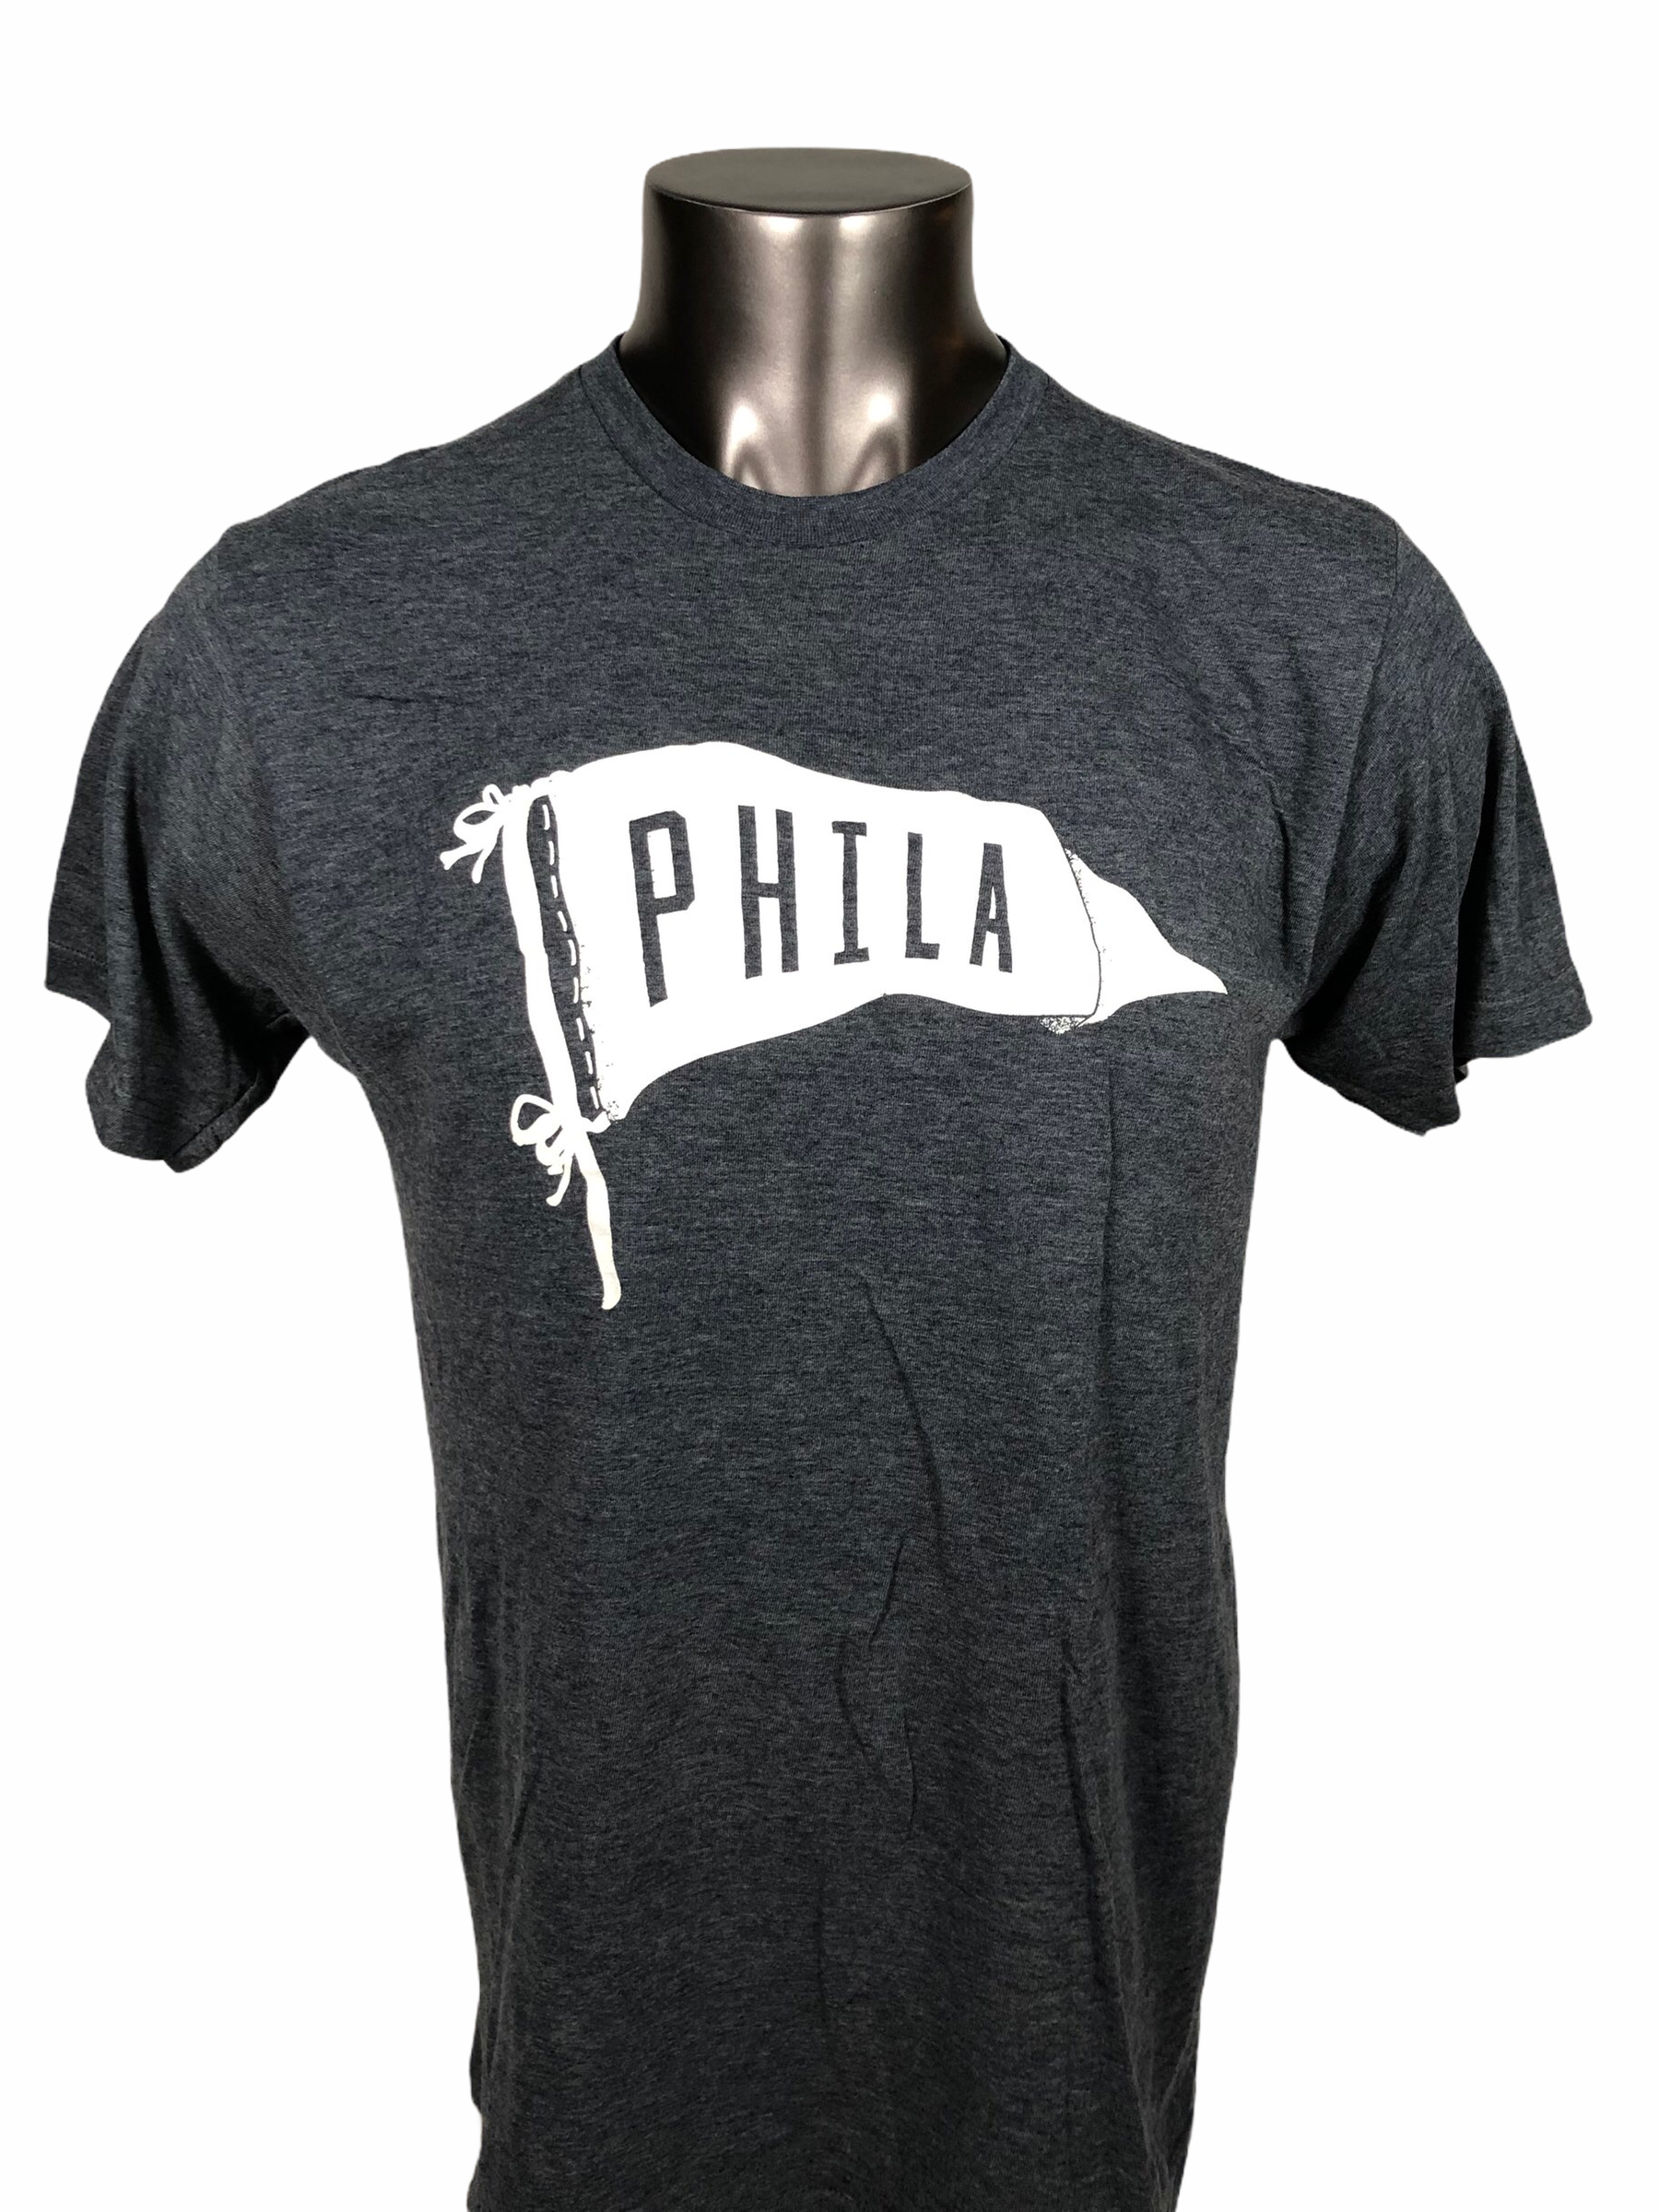  Phillies Shirts